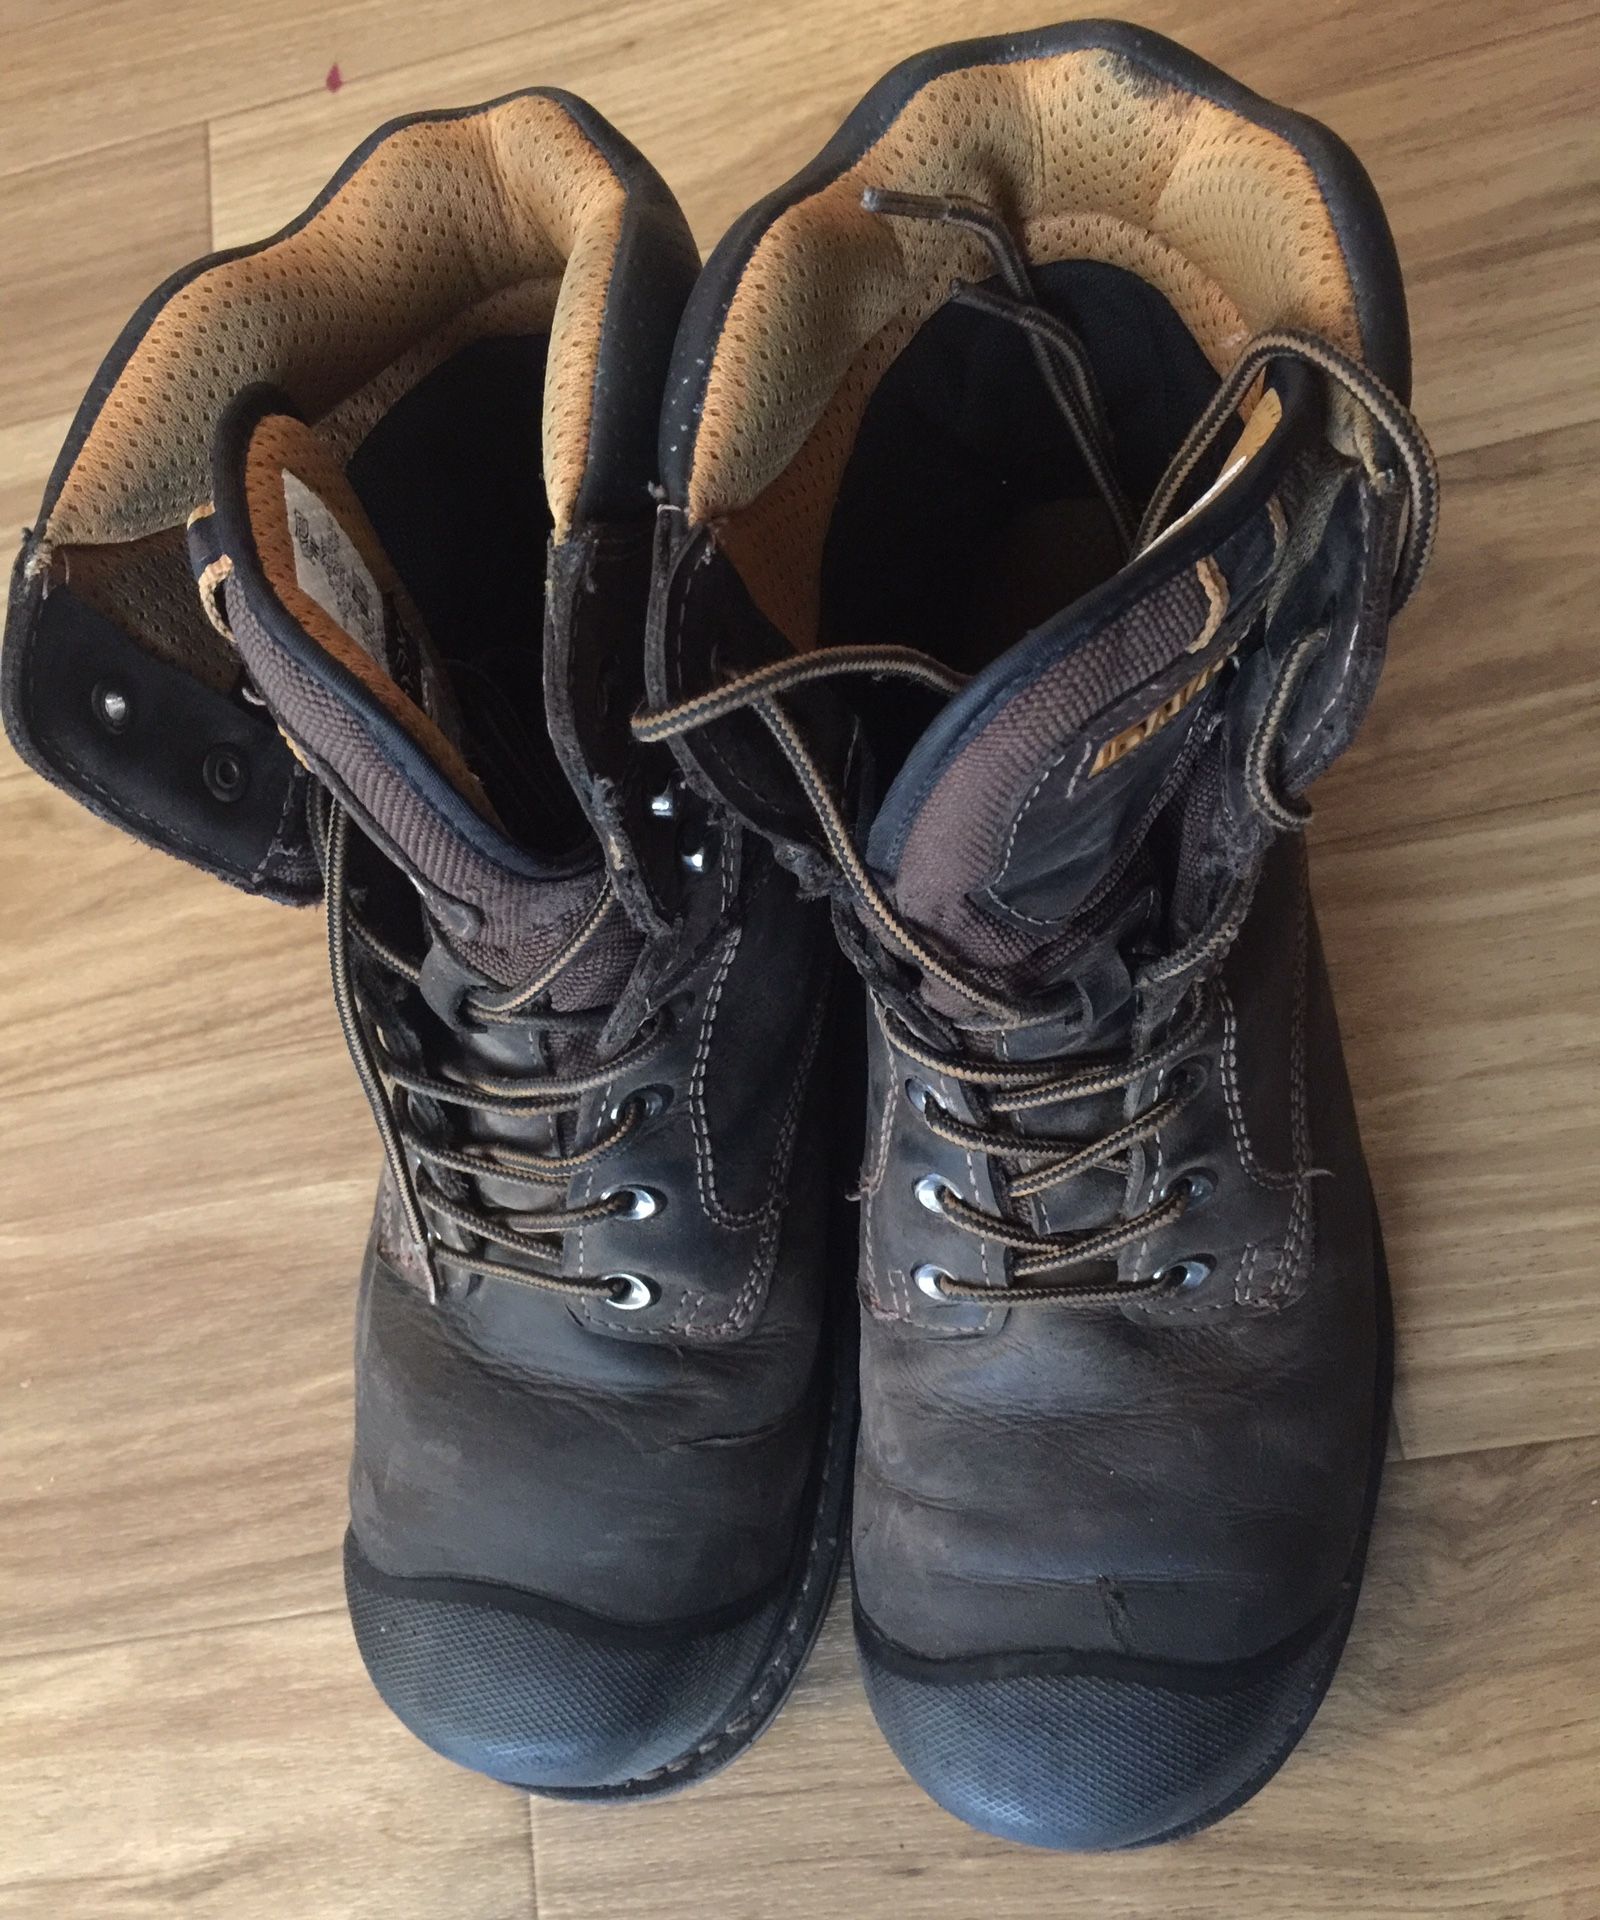 Used!! Dakota Men’s work boots size 10W (Insulation, steel toe)... $90